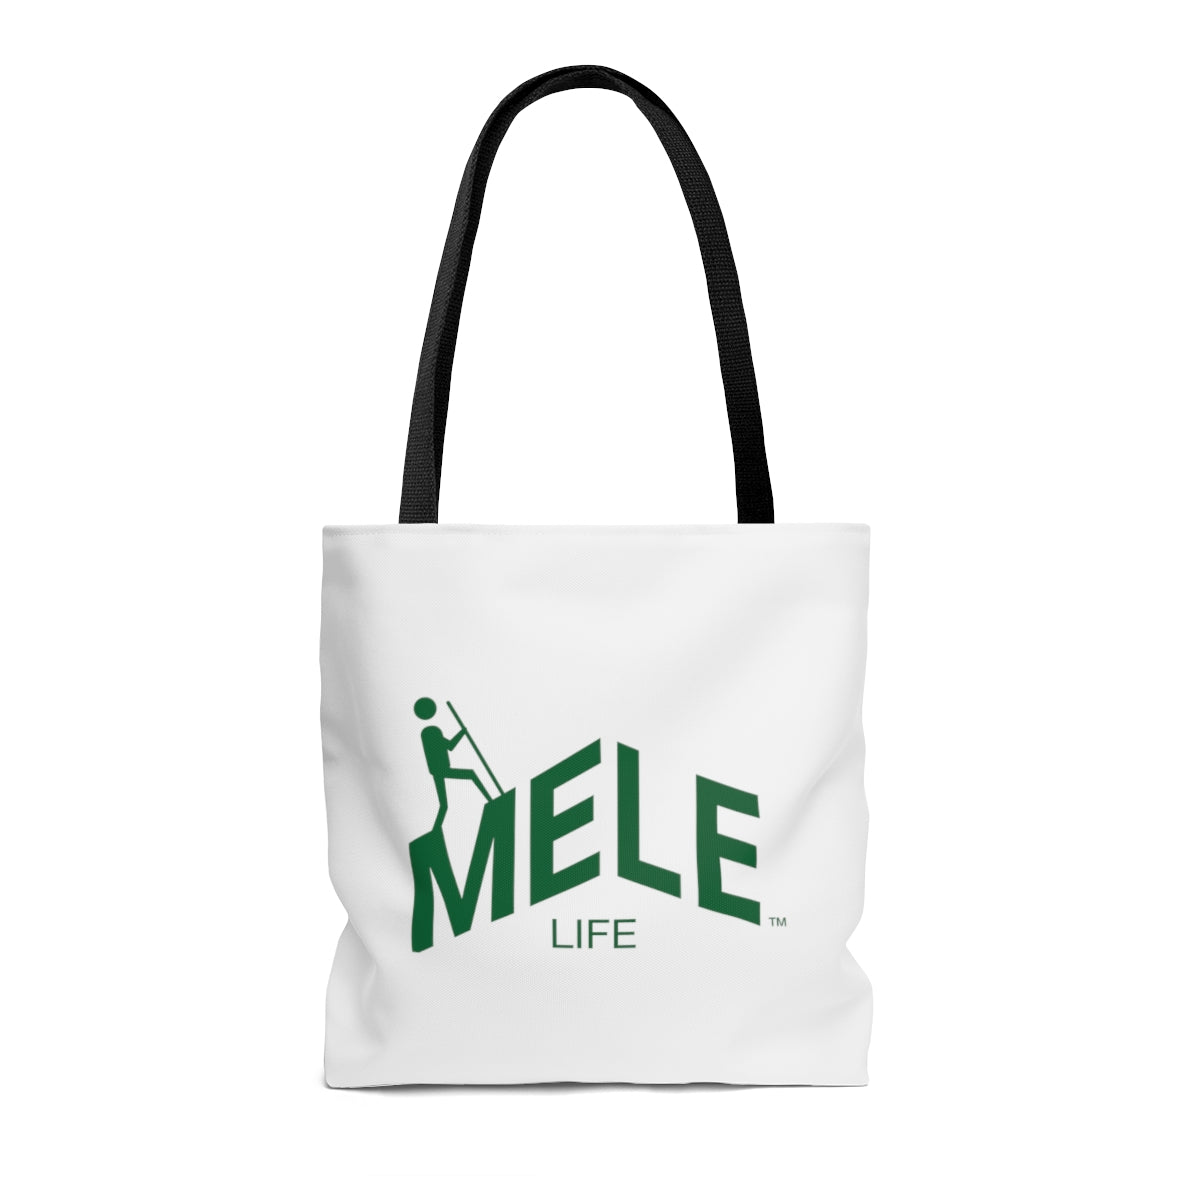 Tote Bag - MELE LIFE